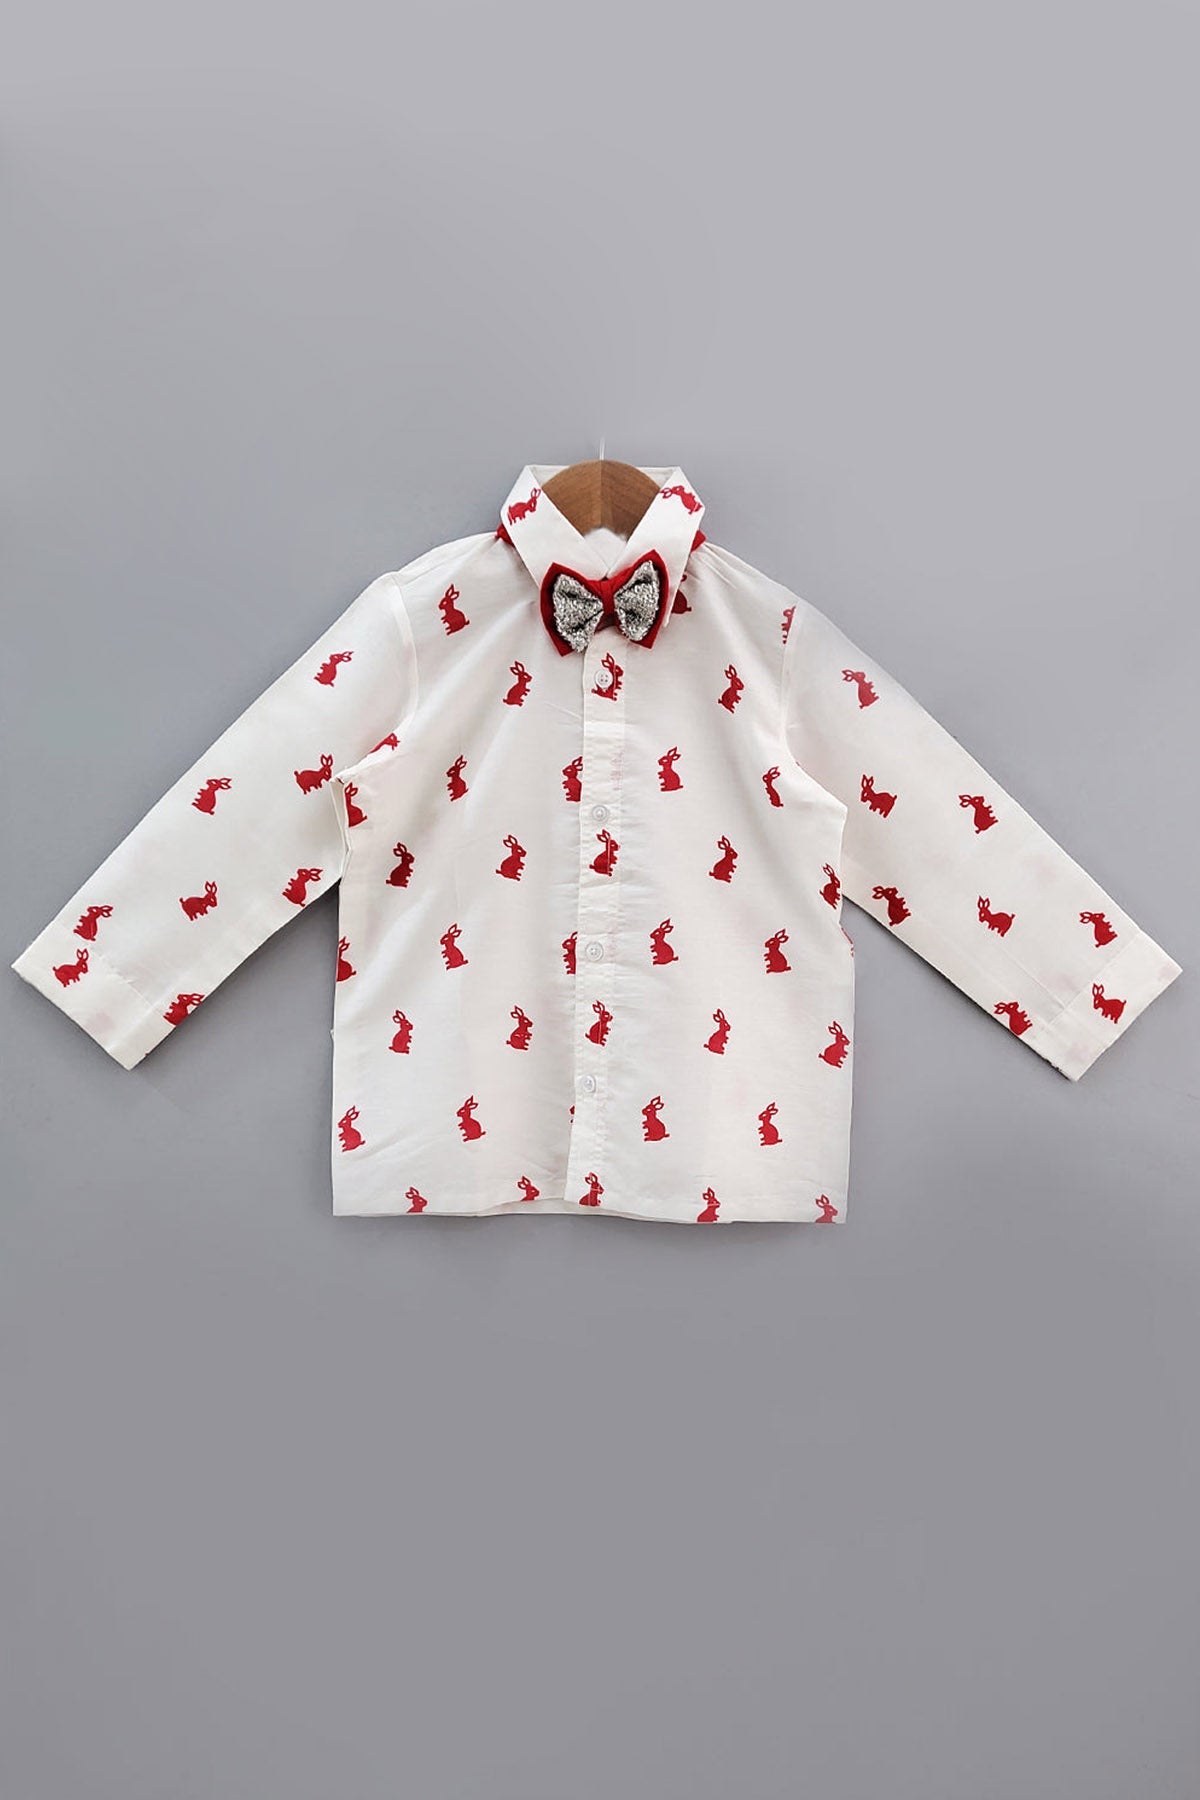 Designer Little Brats Bunny Printed Shirt For Kids Available online at ScrollnShops